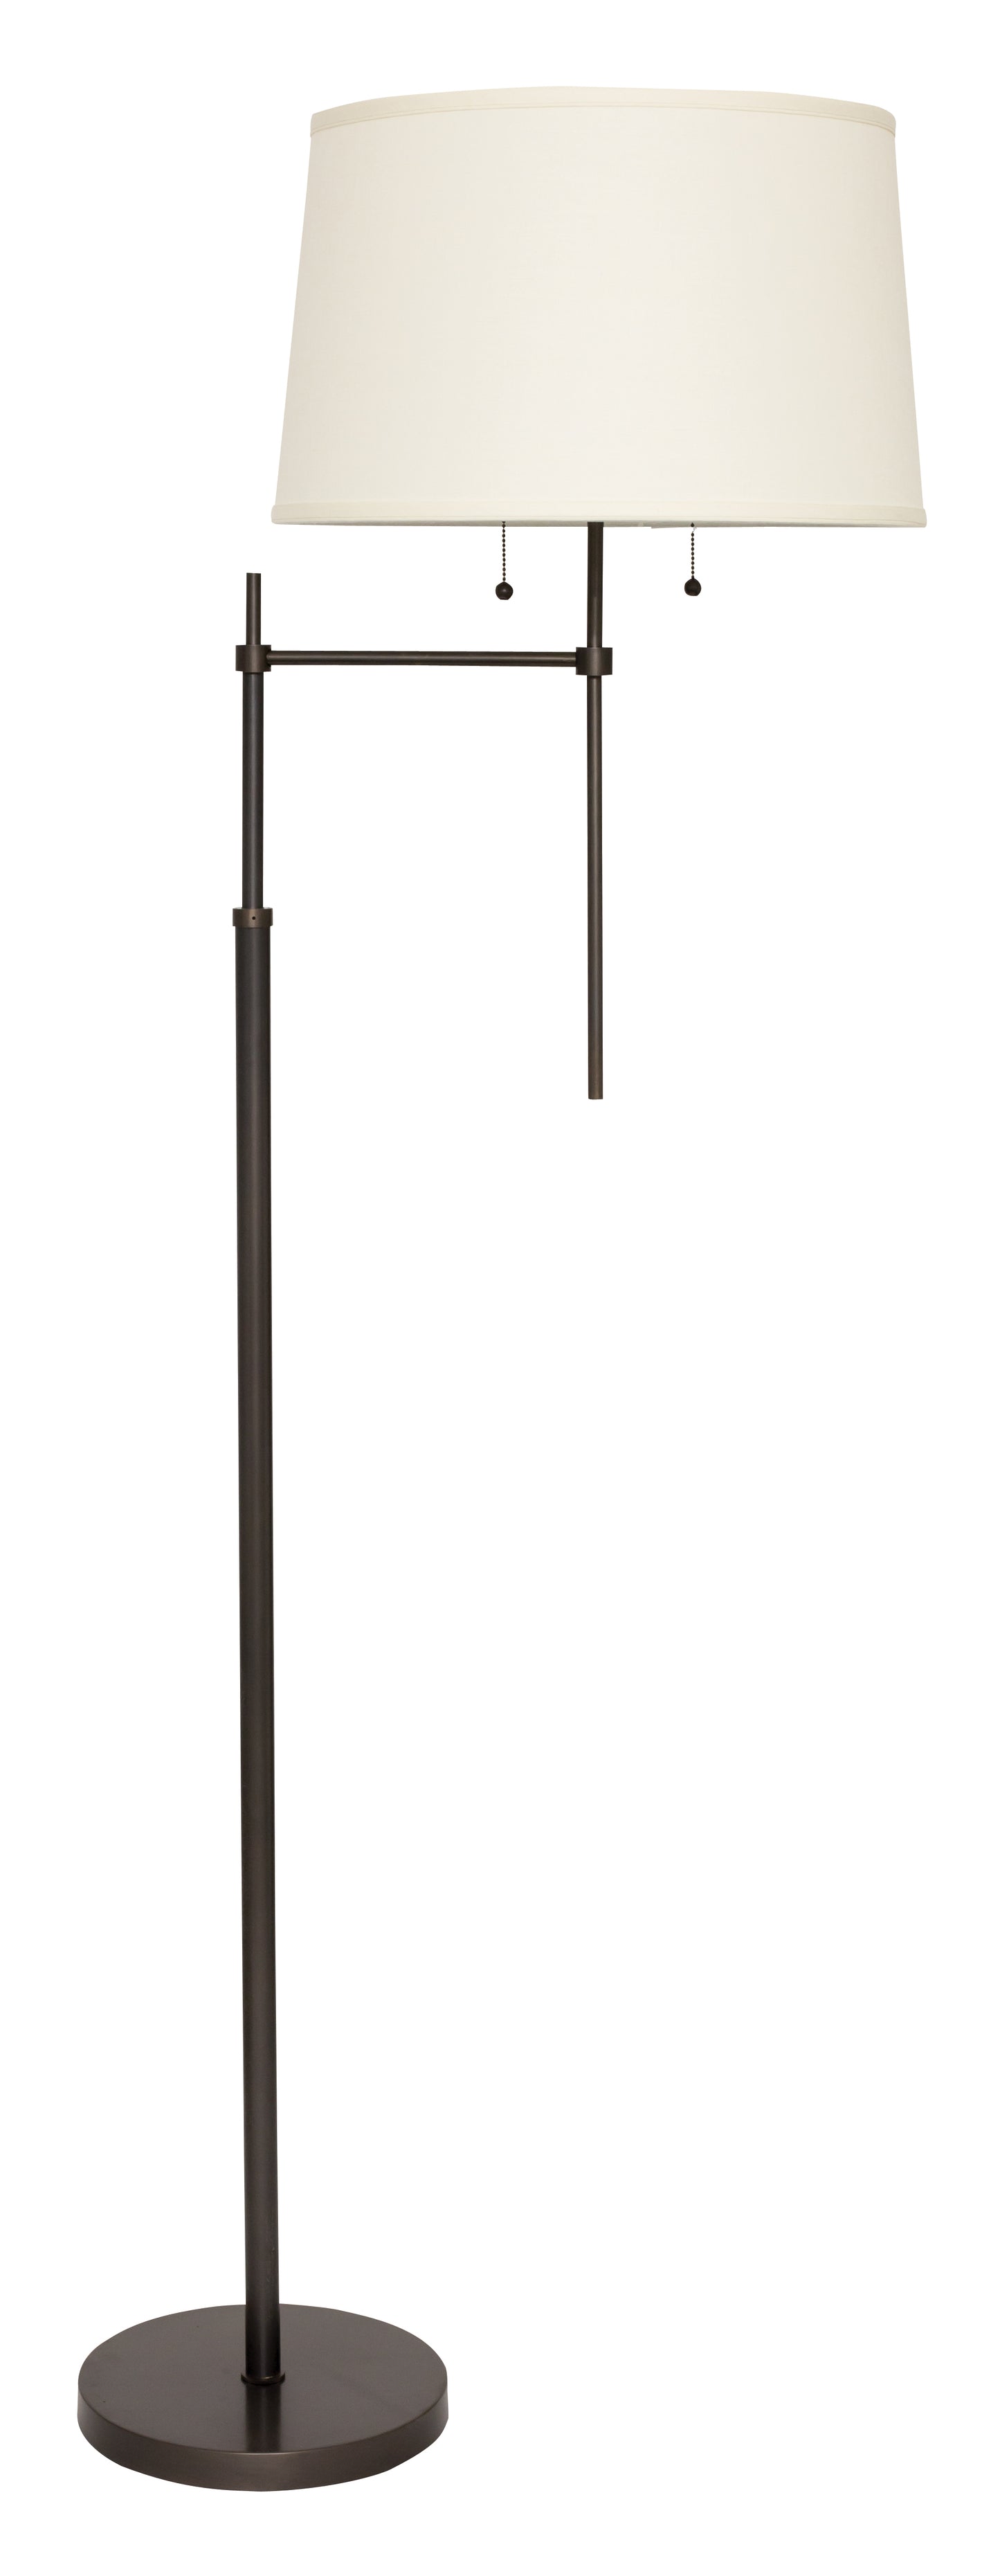 House of Troy Averill Adjustable Floor Lamp with Offset Arm in Oil Rubbed Bronze AV101-OB